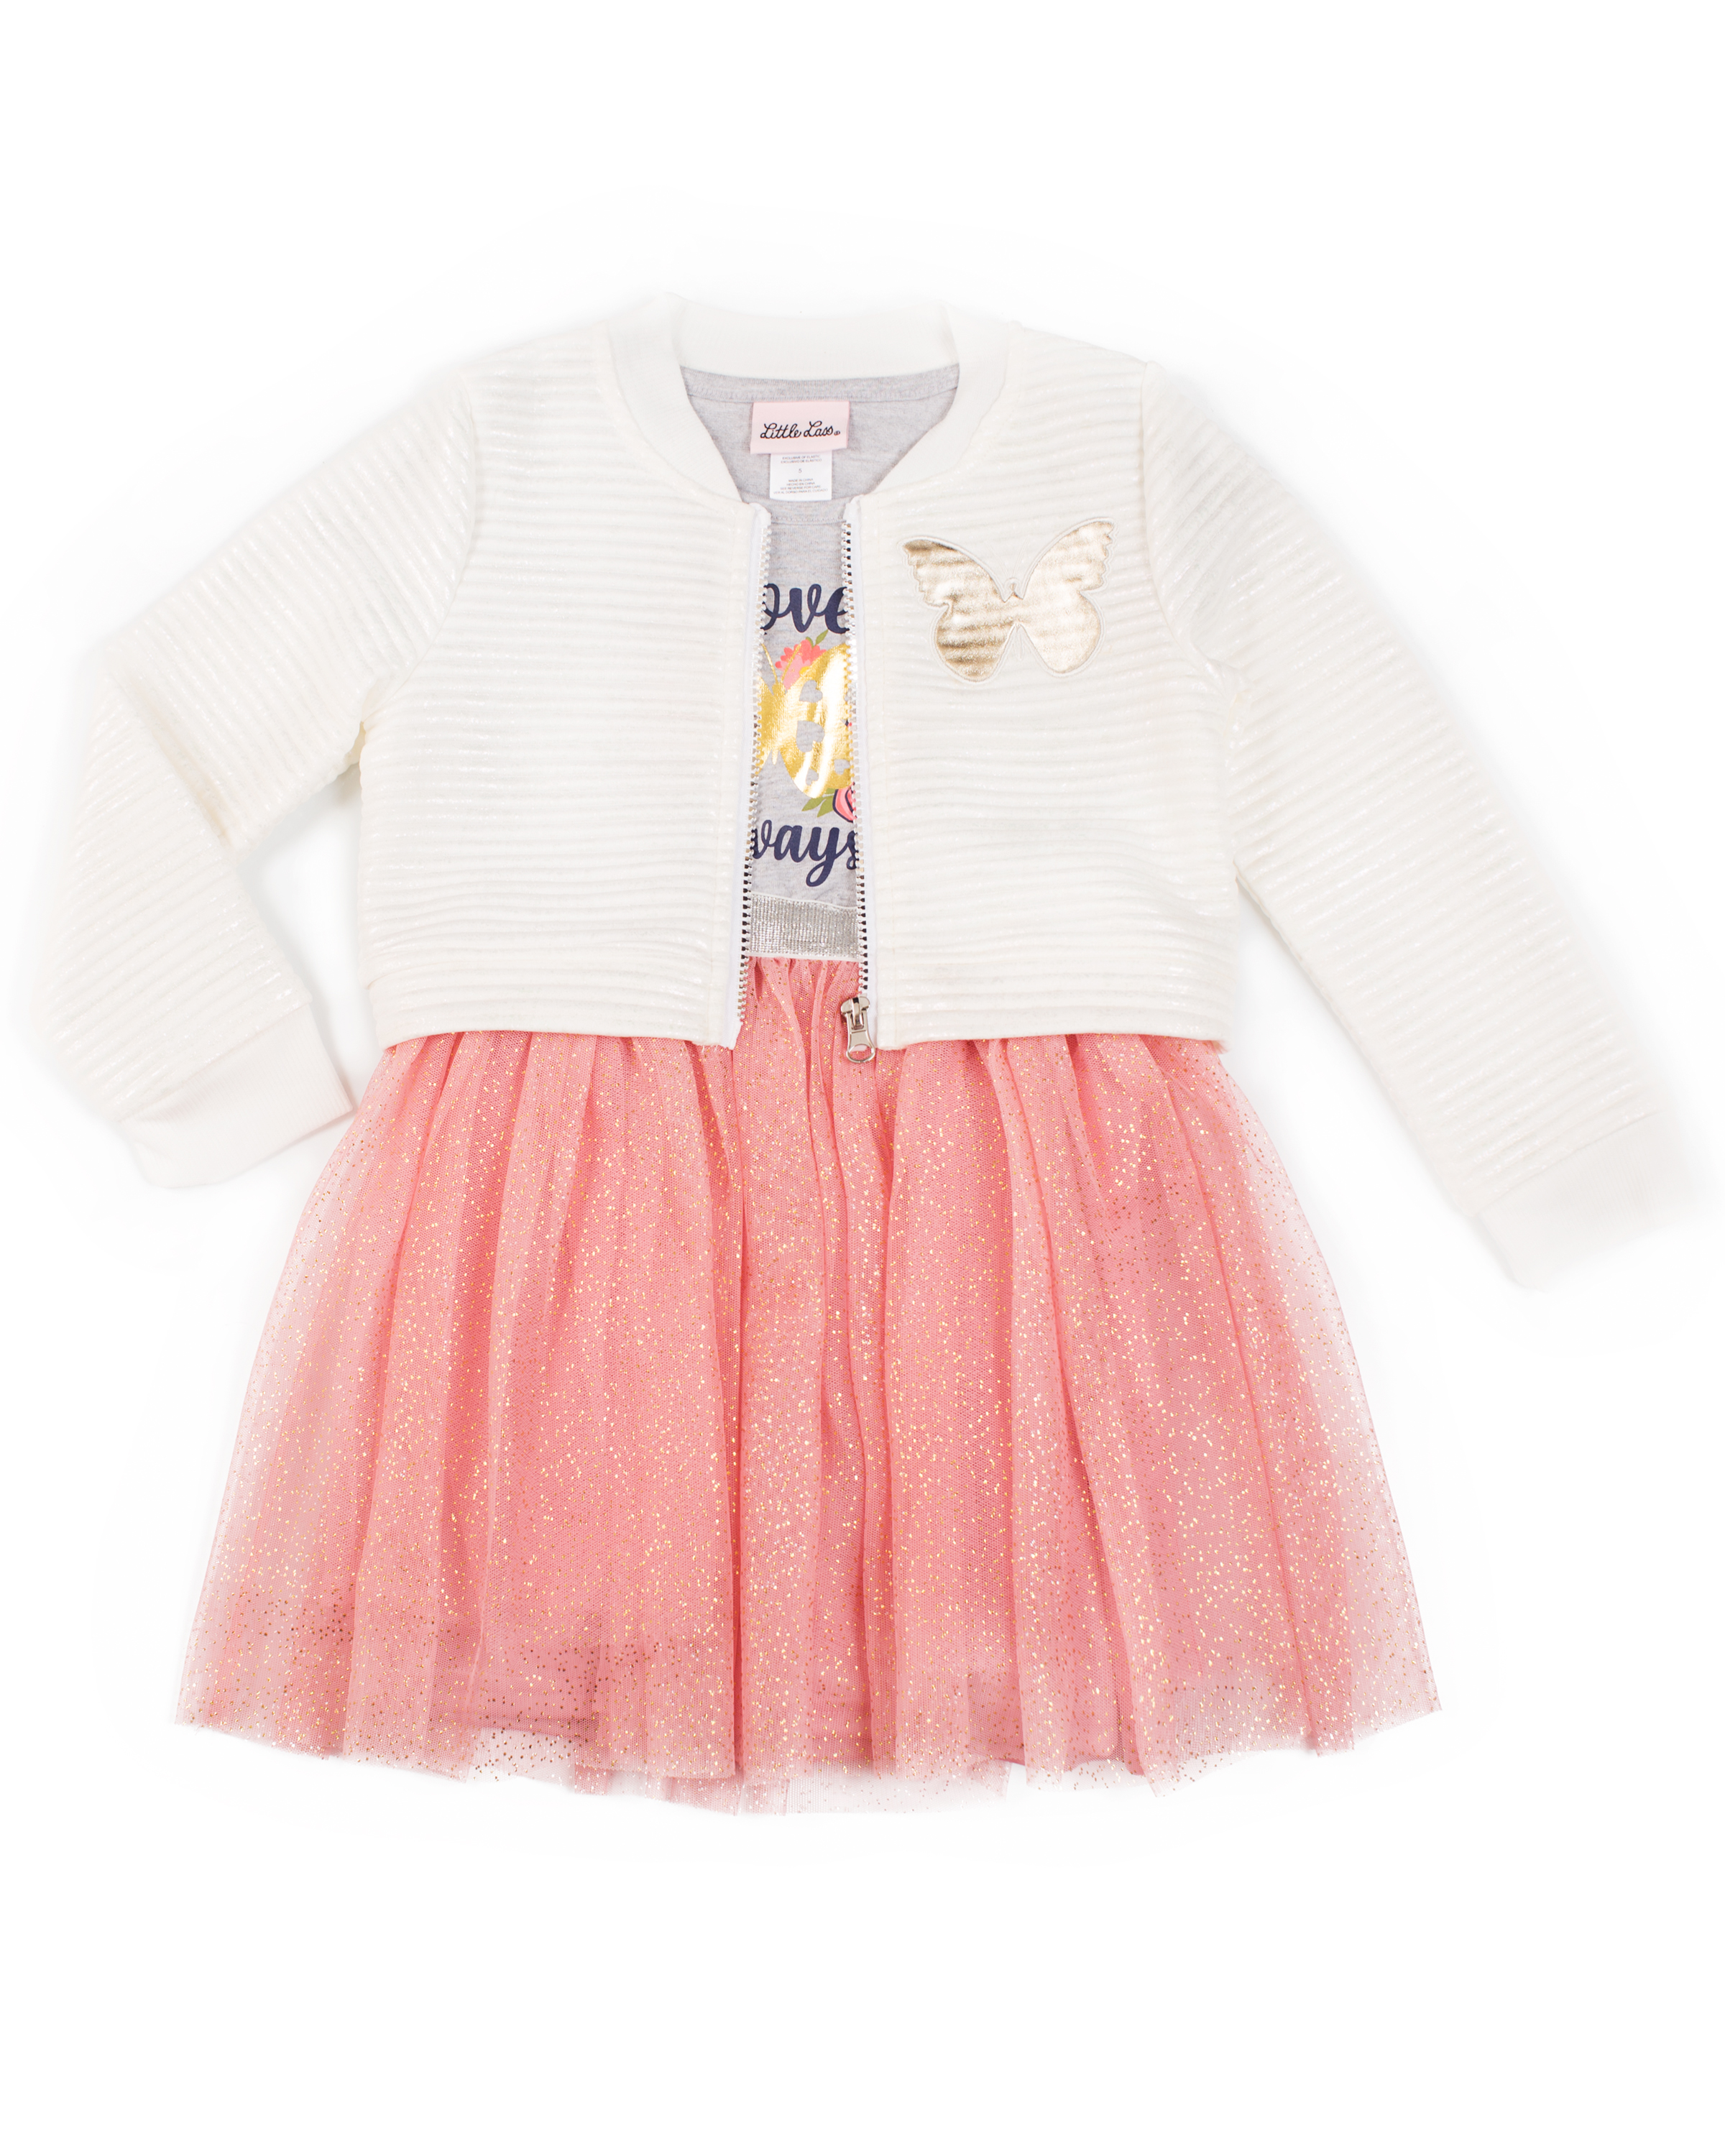 Little Lass Cozy Bomber Jacket and Fashion Tutu Dress, 2-Piece (Little Girls) - image 1 of 2